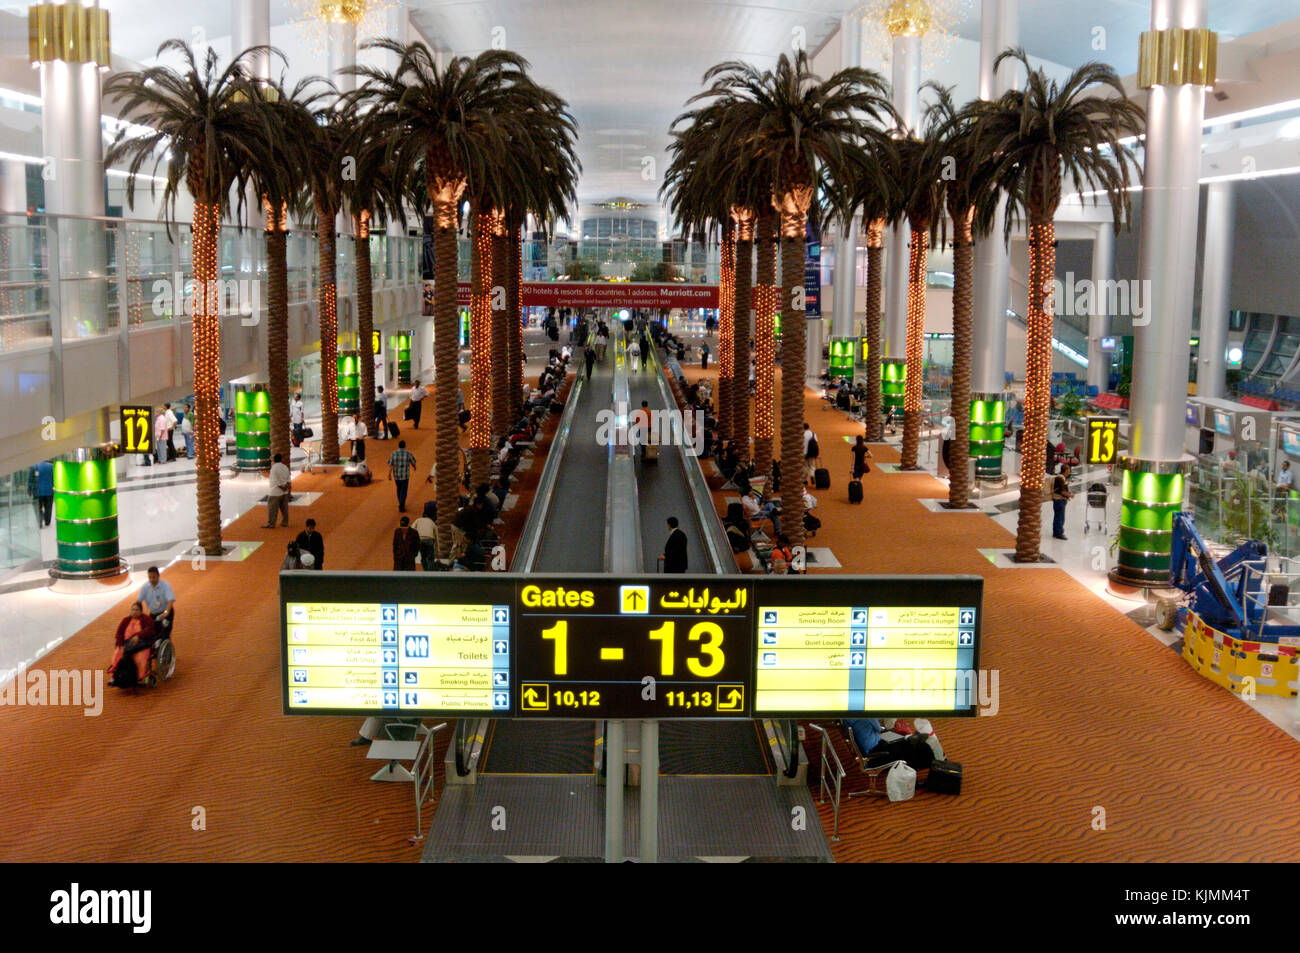 The Sheikh Rashid passenger terminal at Dubai International airport. Elevated view, passengers using travelators and walking along. Large open spaces  Stock Photo